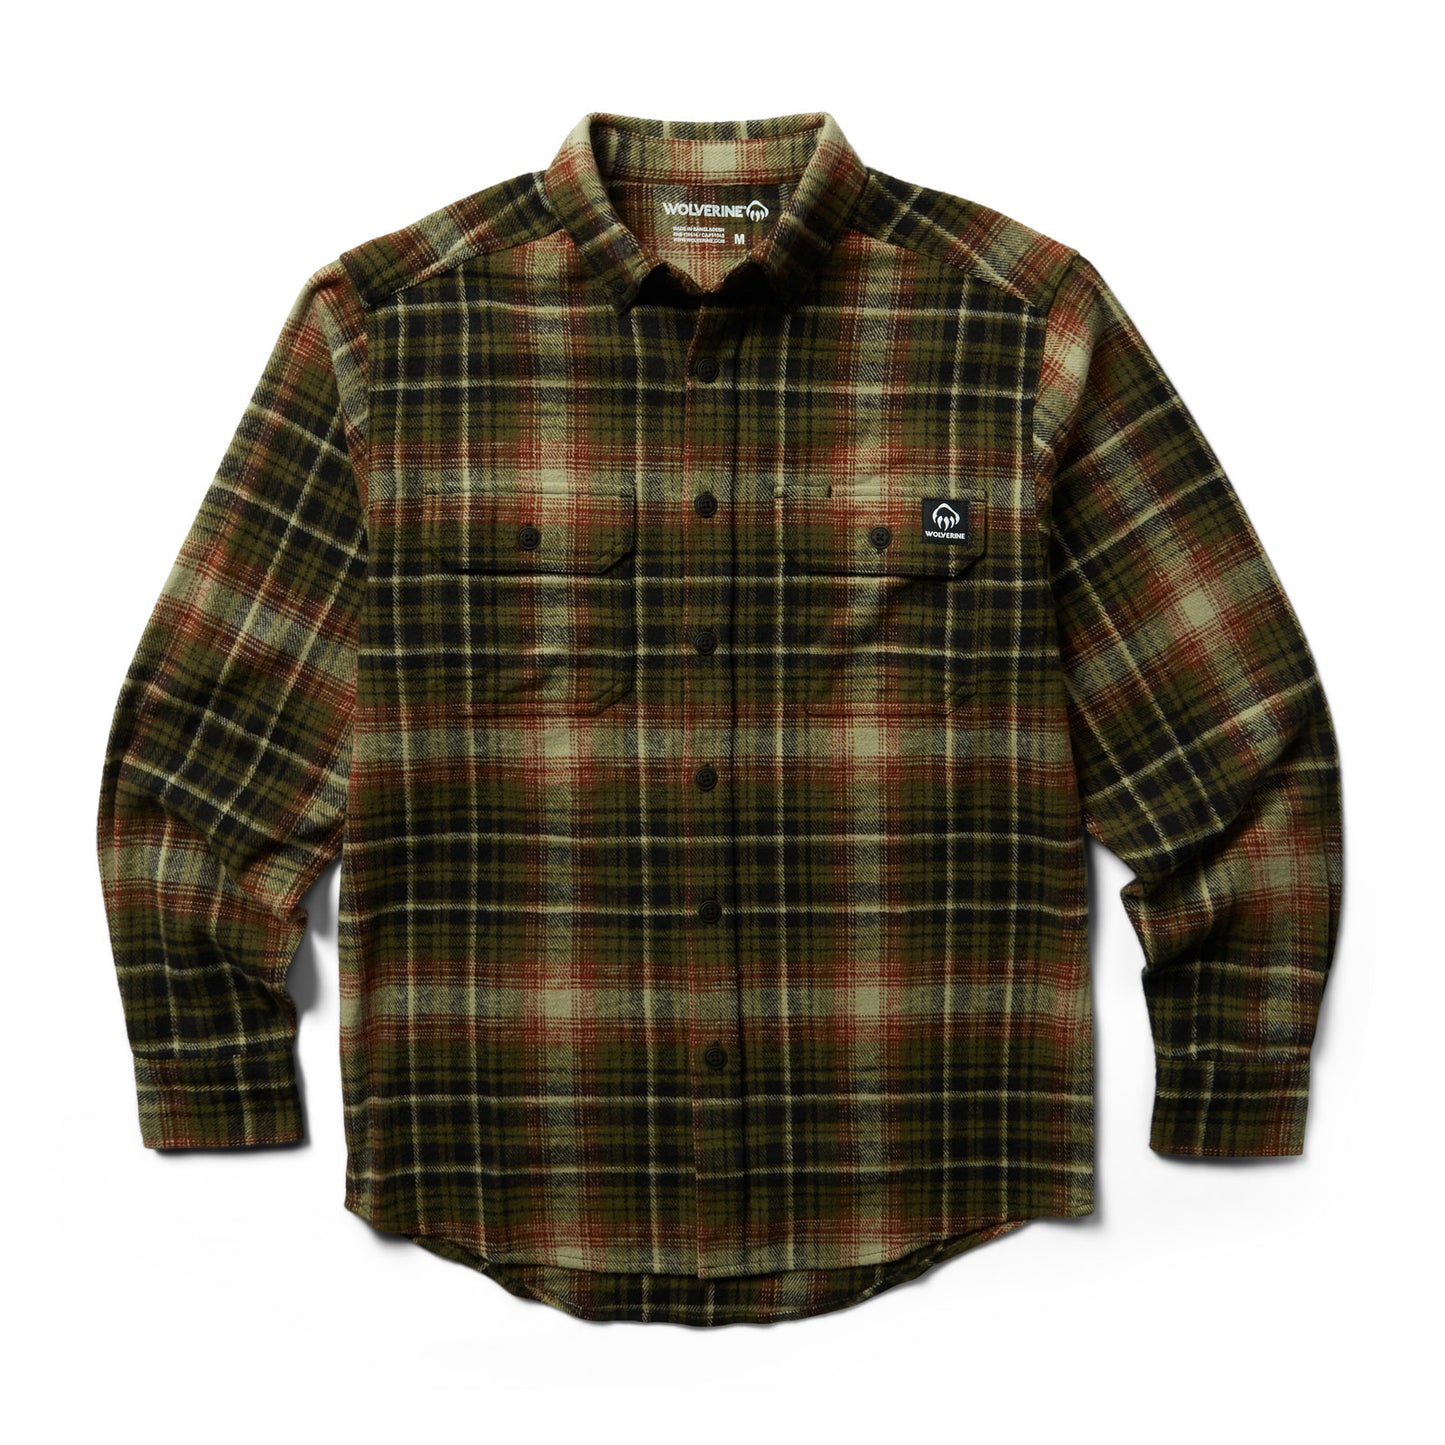 Peltz Shoes  Men's Wolverine Glacier Heavyweight Flannel Shirt KHAKI W1205850-236